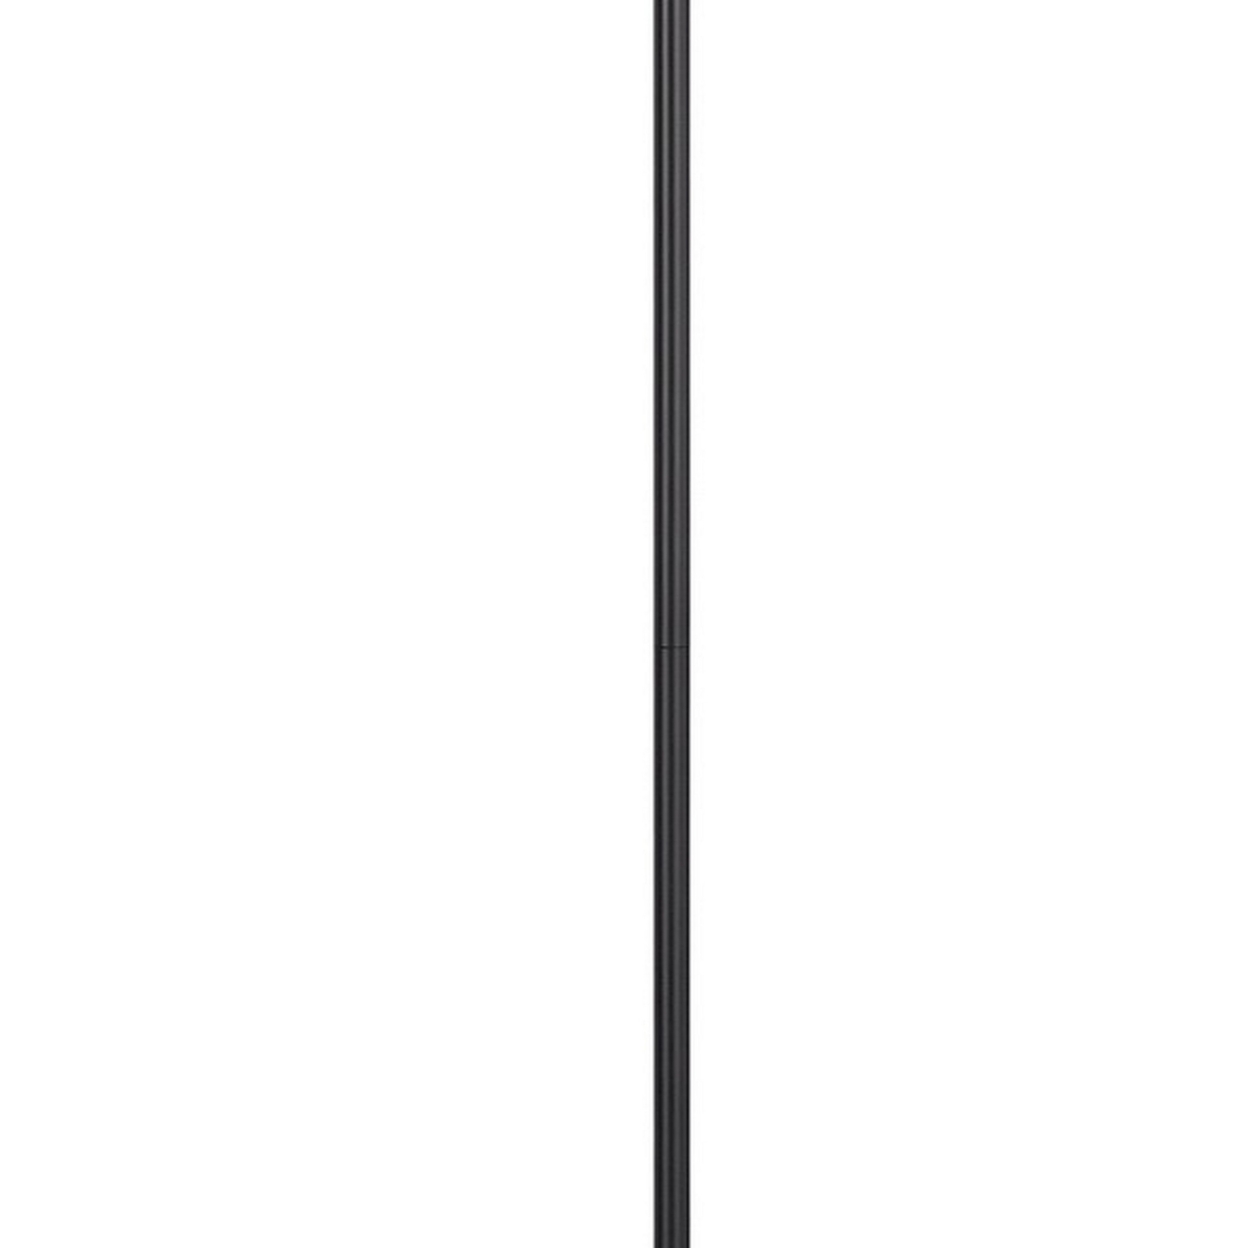 63 Inch Metal Lamp, Downbridge Adjustable Bamboo Shade, Brown, Black- Saltoro Sherpi